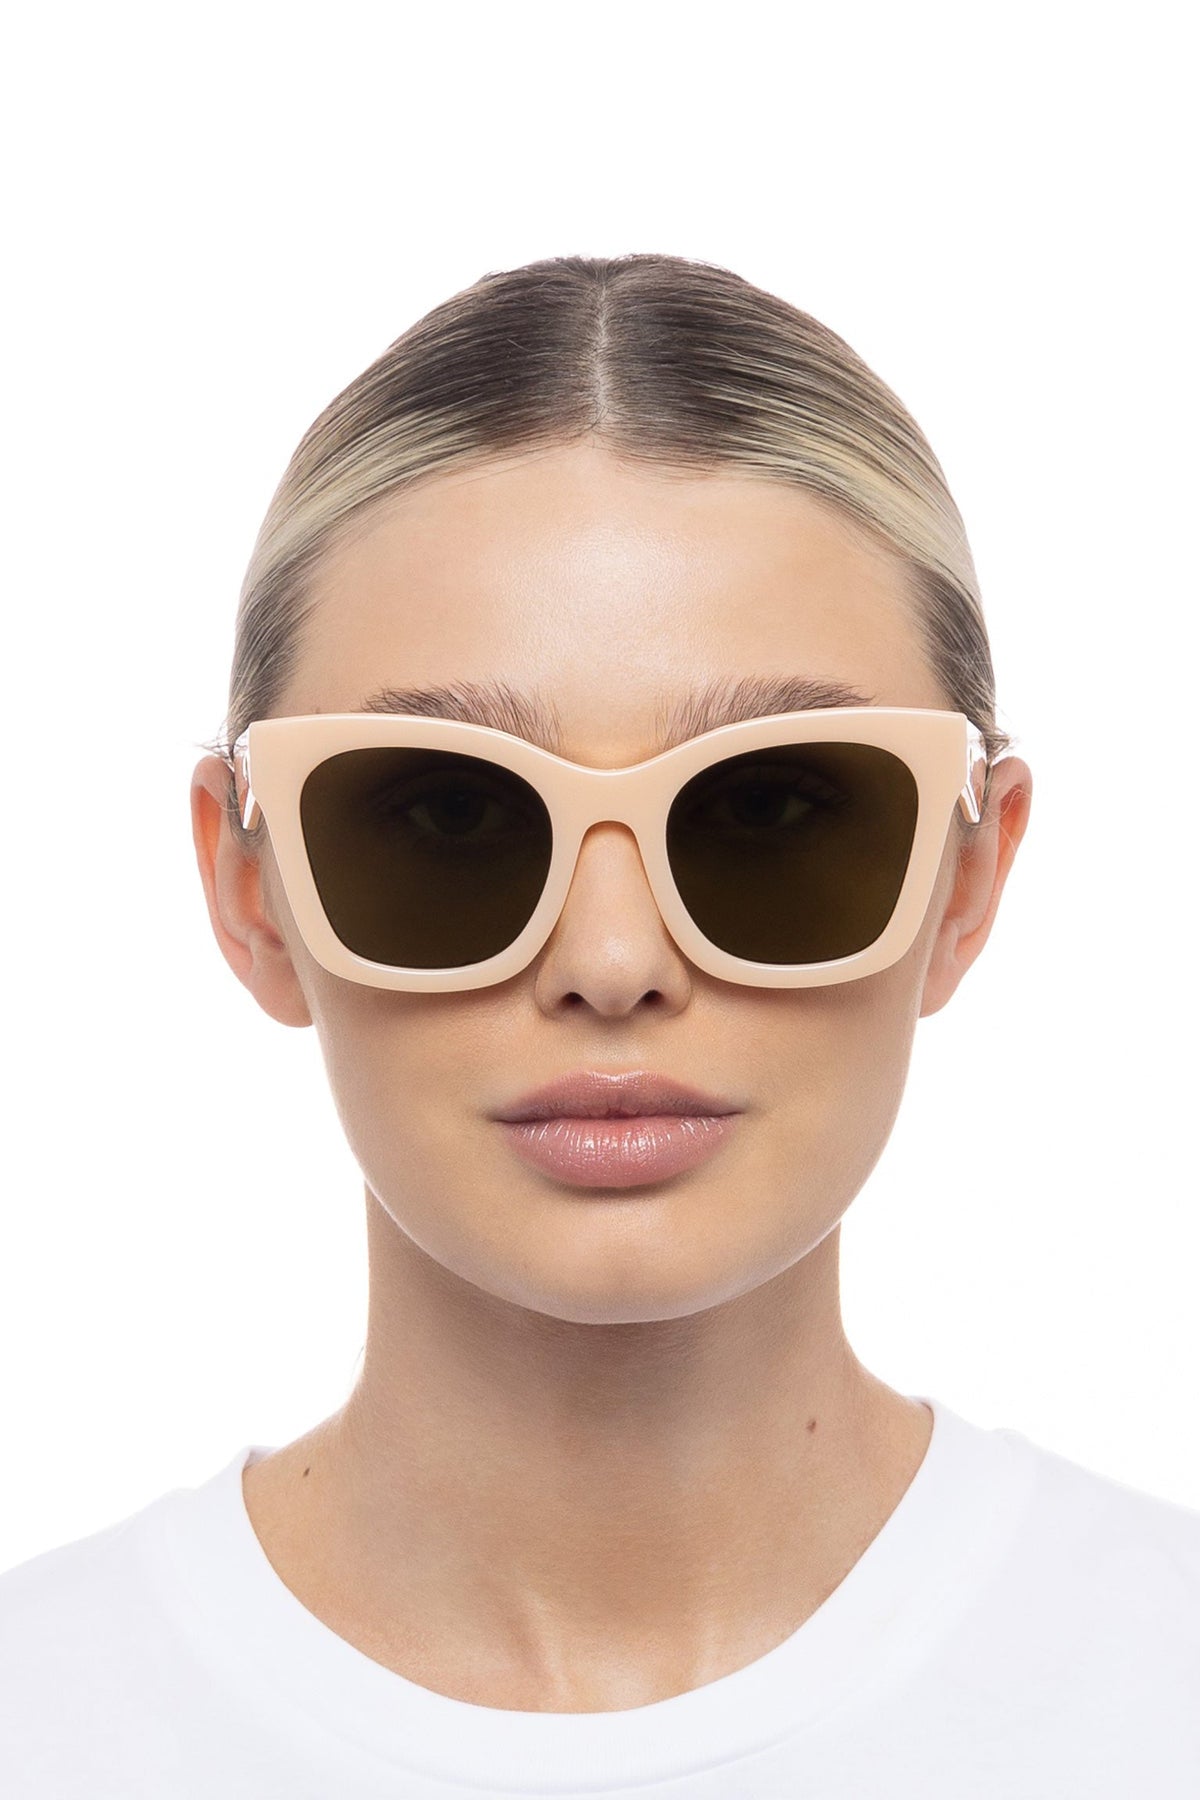 Showstopper Sunglasses - Butterscotch